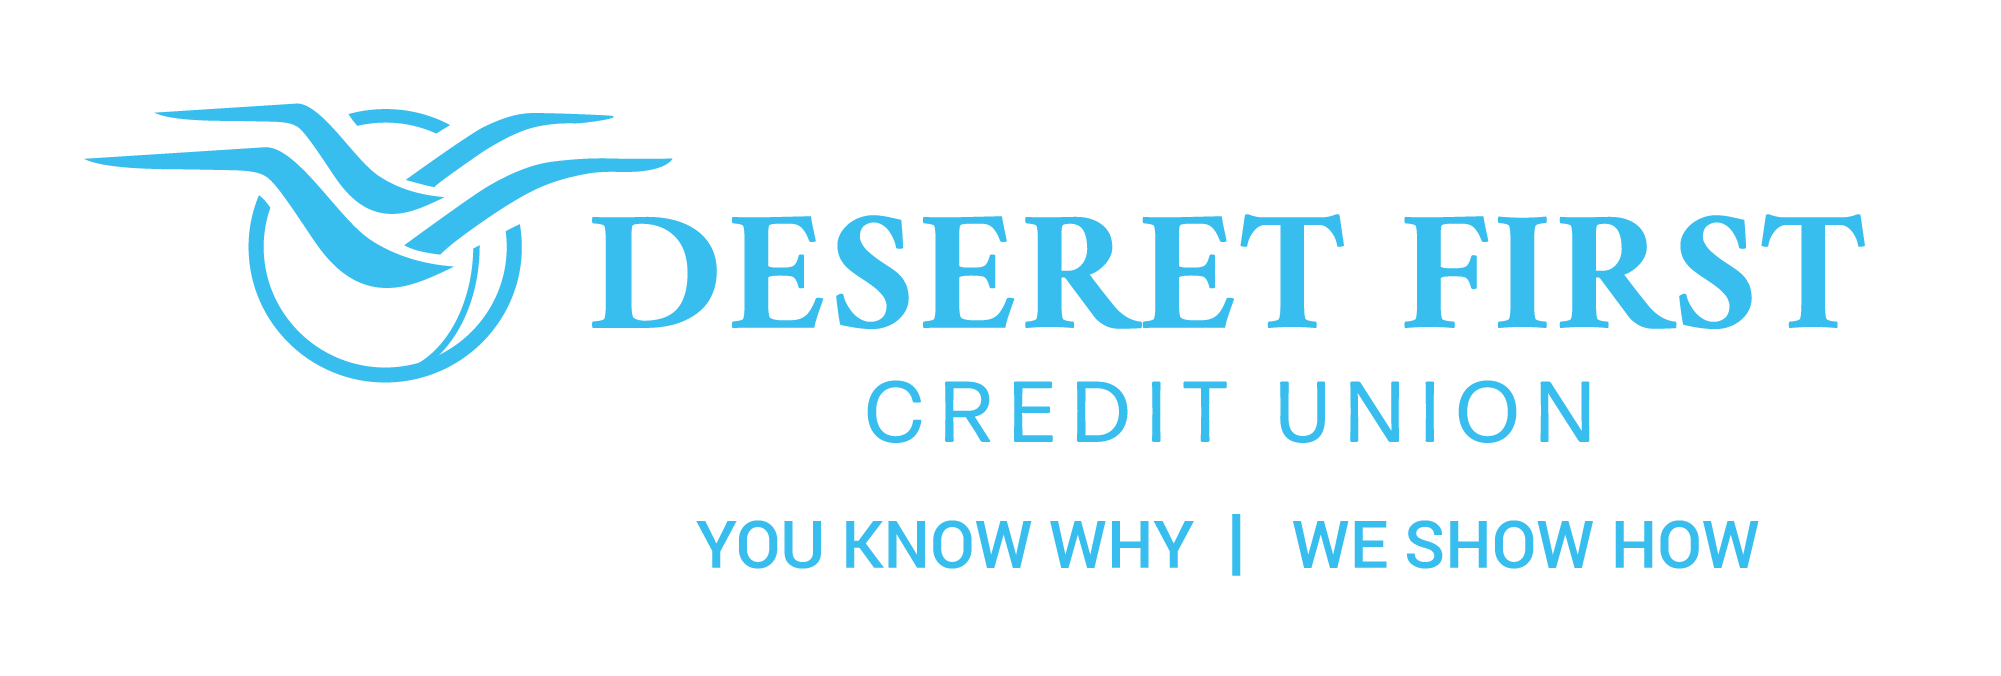 Deseret First Credit Union Company Logo